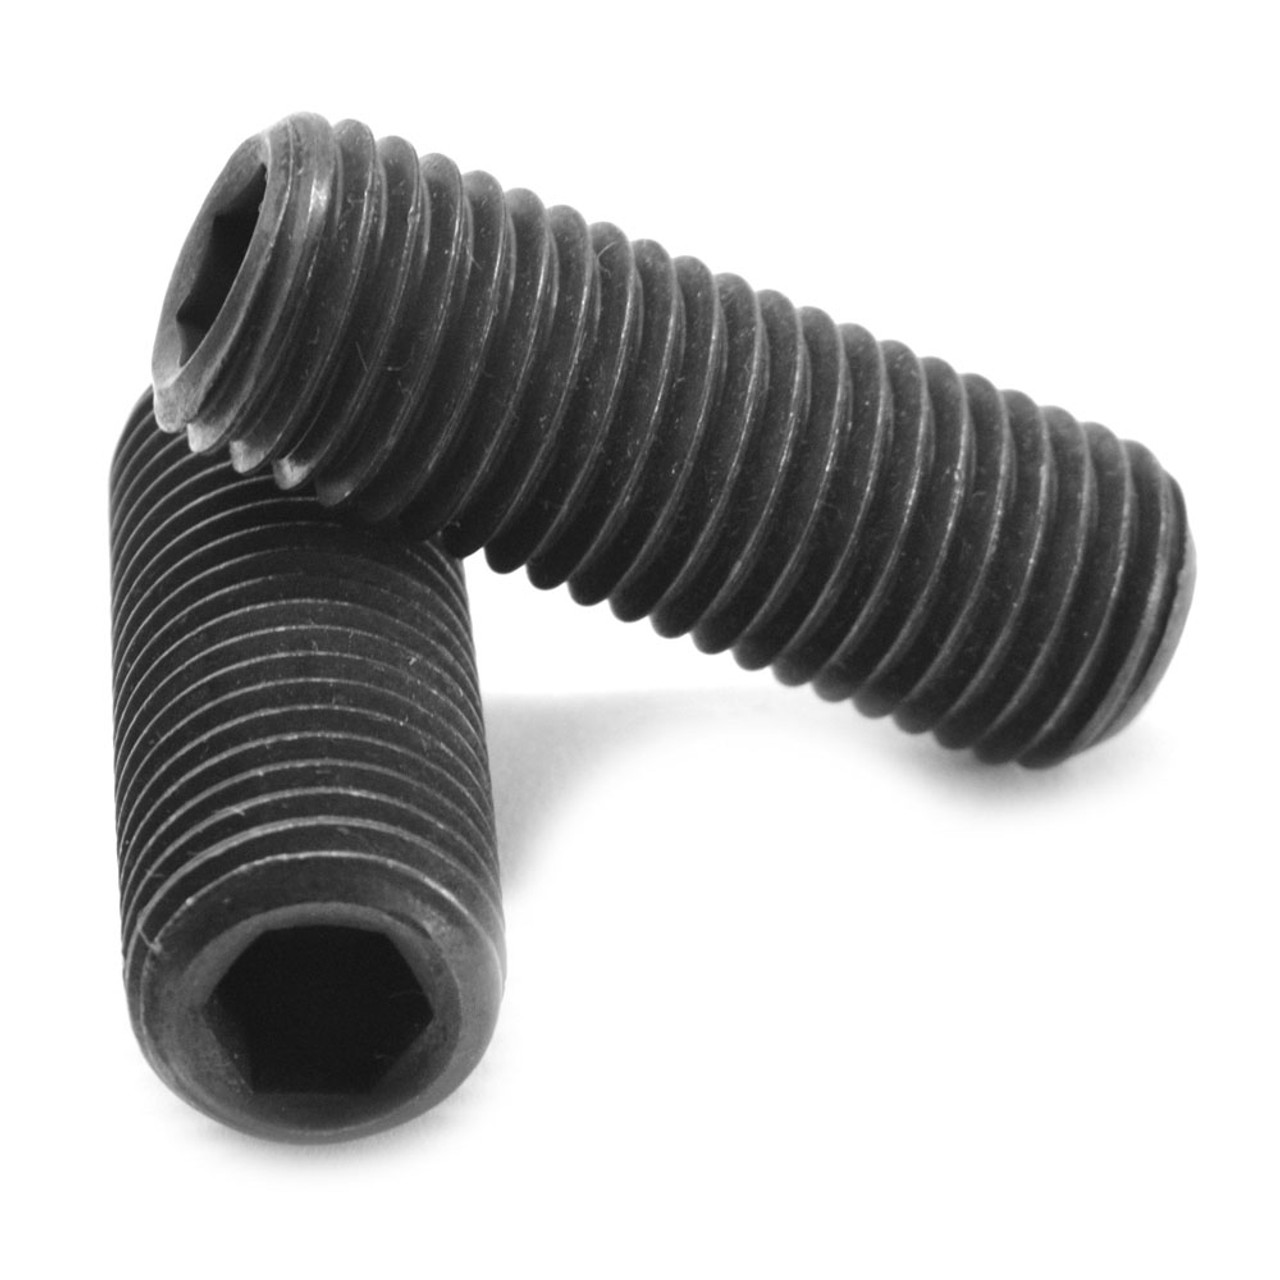 M6 x 1.00 x 15 MM Coarse Thread ISO 4029 / DIN 916 Class 45H Socket Set Screw Cup Point Alloy Steel Black Oxide